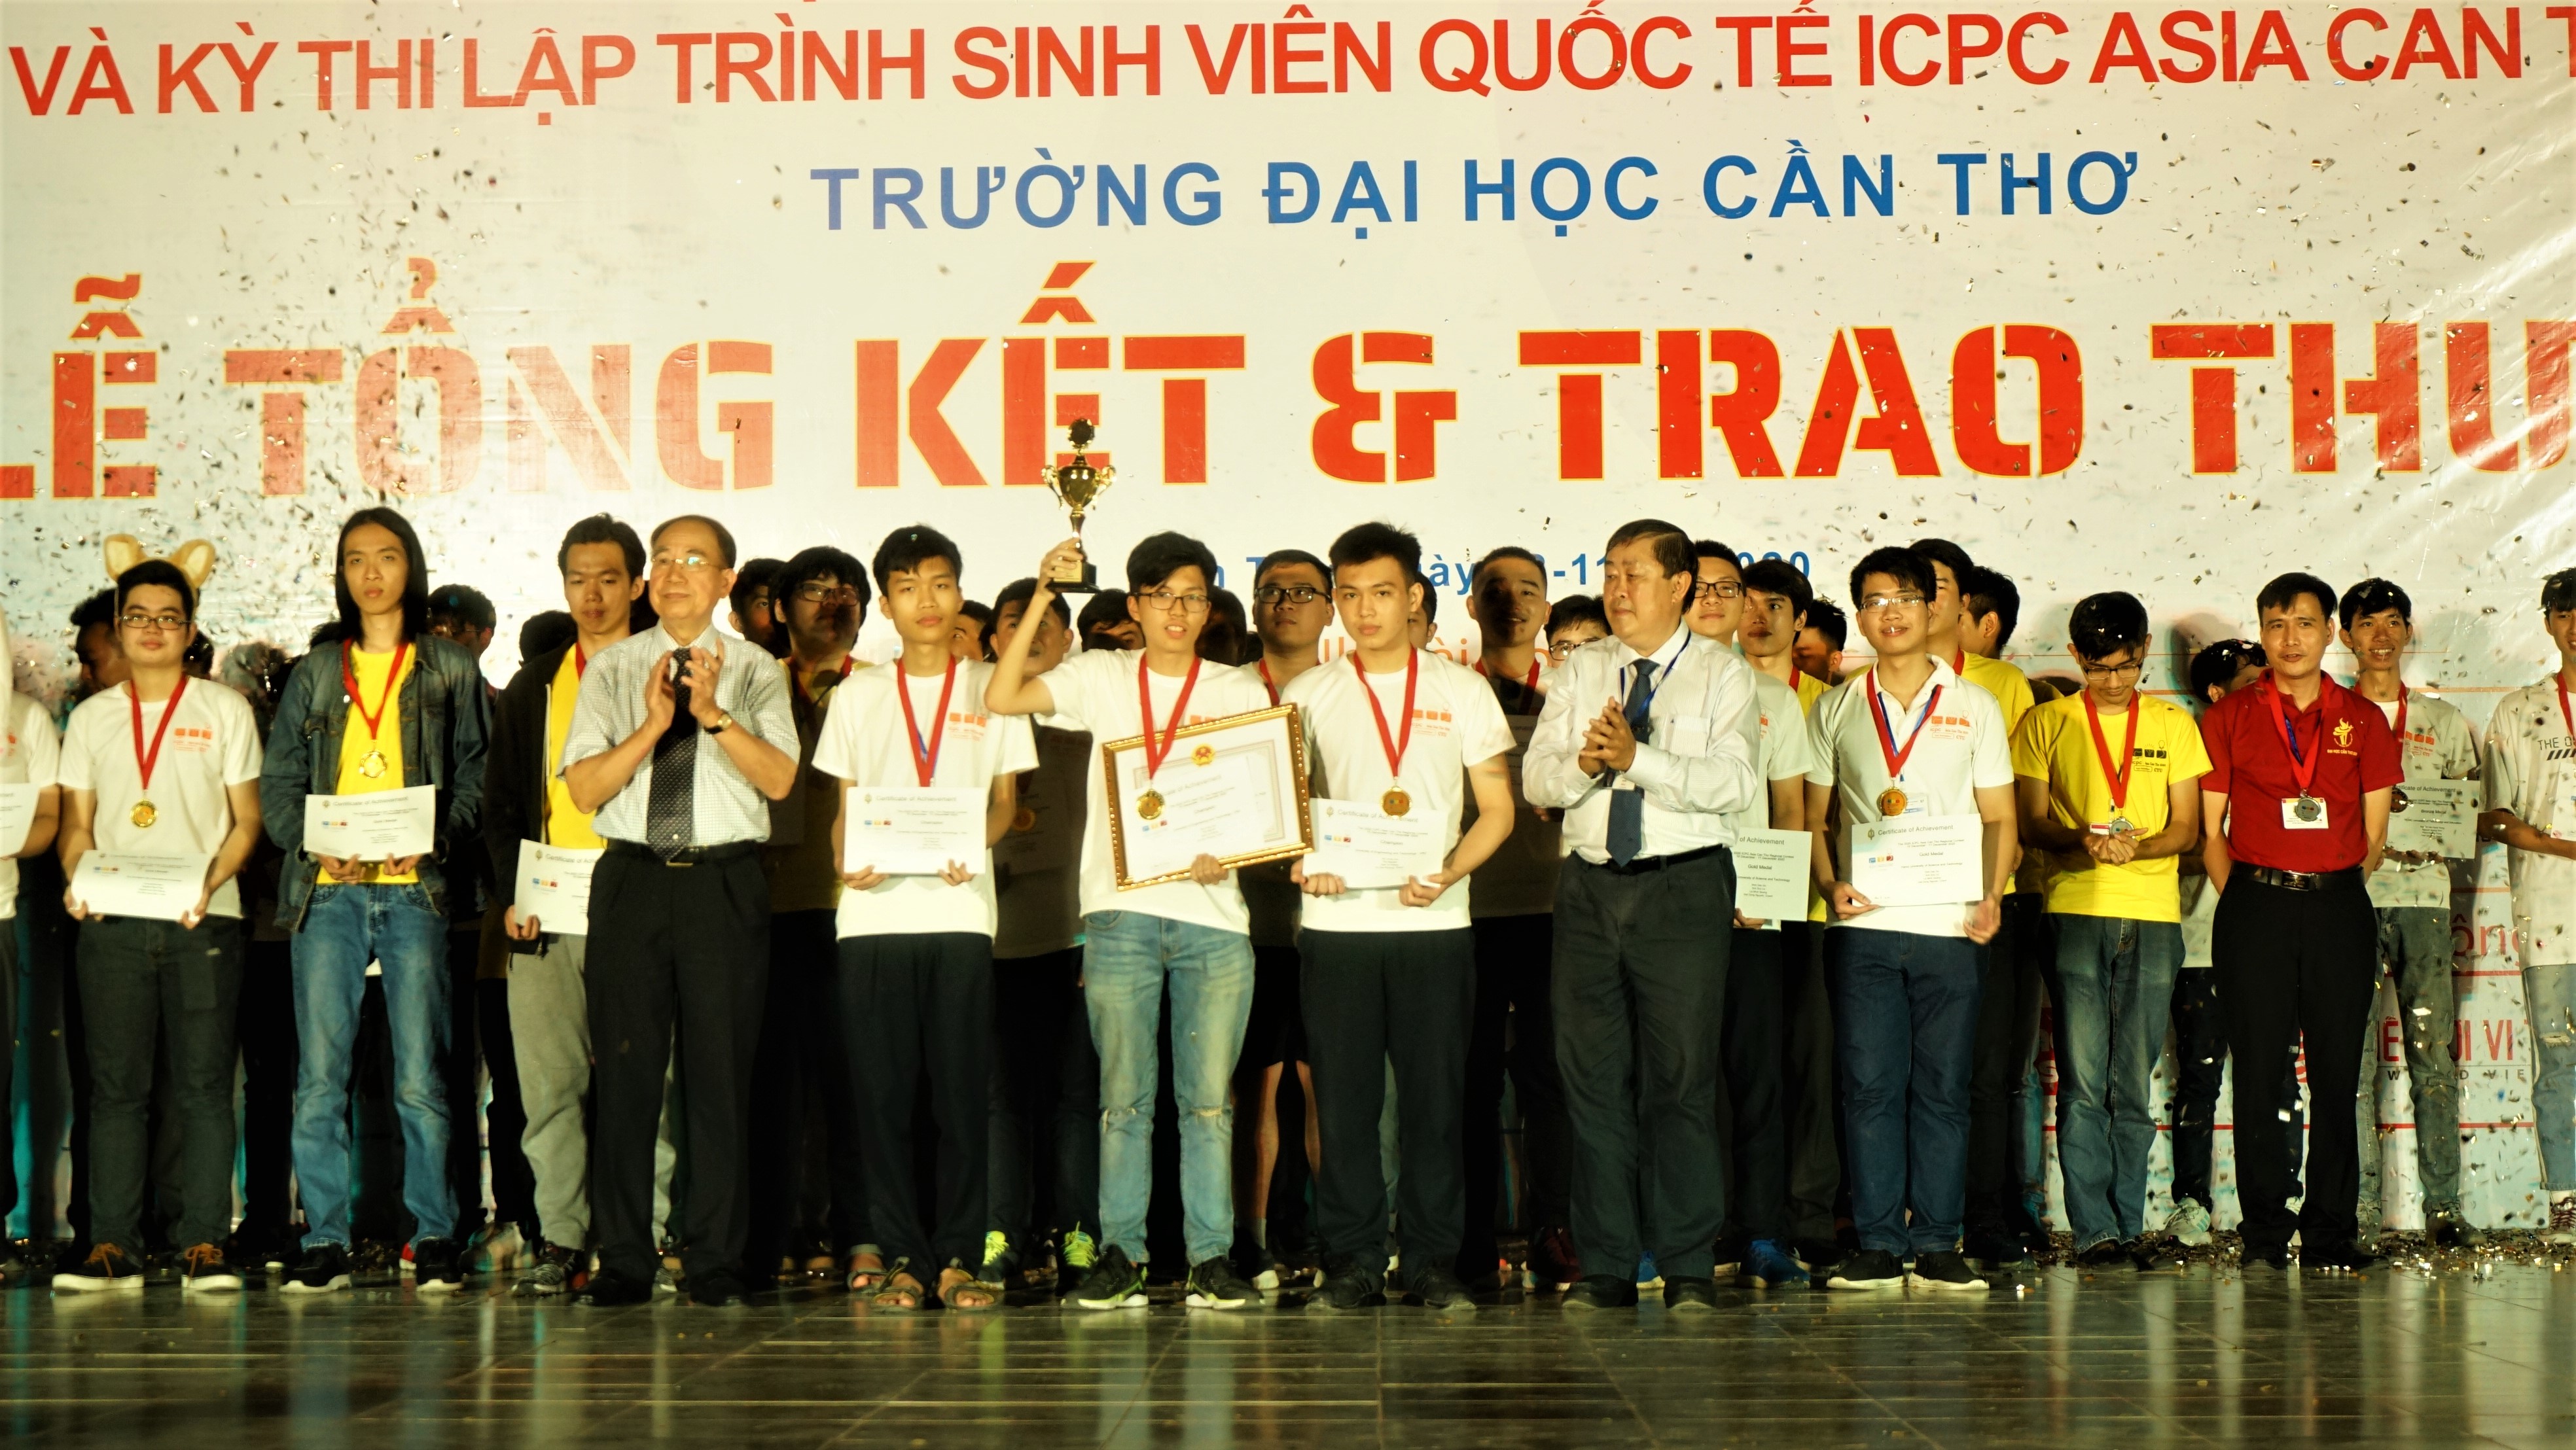 Tổng kết - Trao giải Kỳ thi OLP'20 - PROCON - ICPC Asia Can Tho